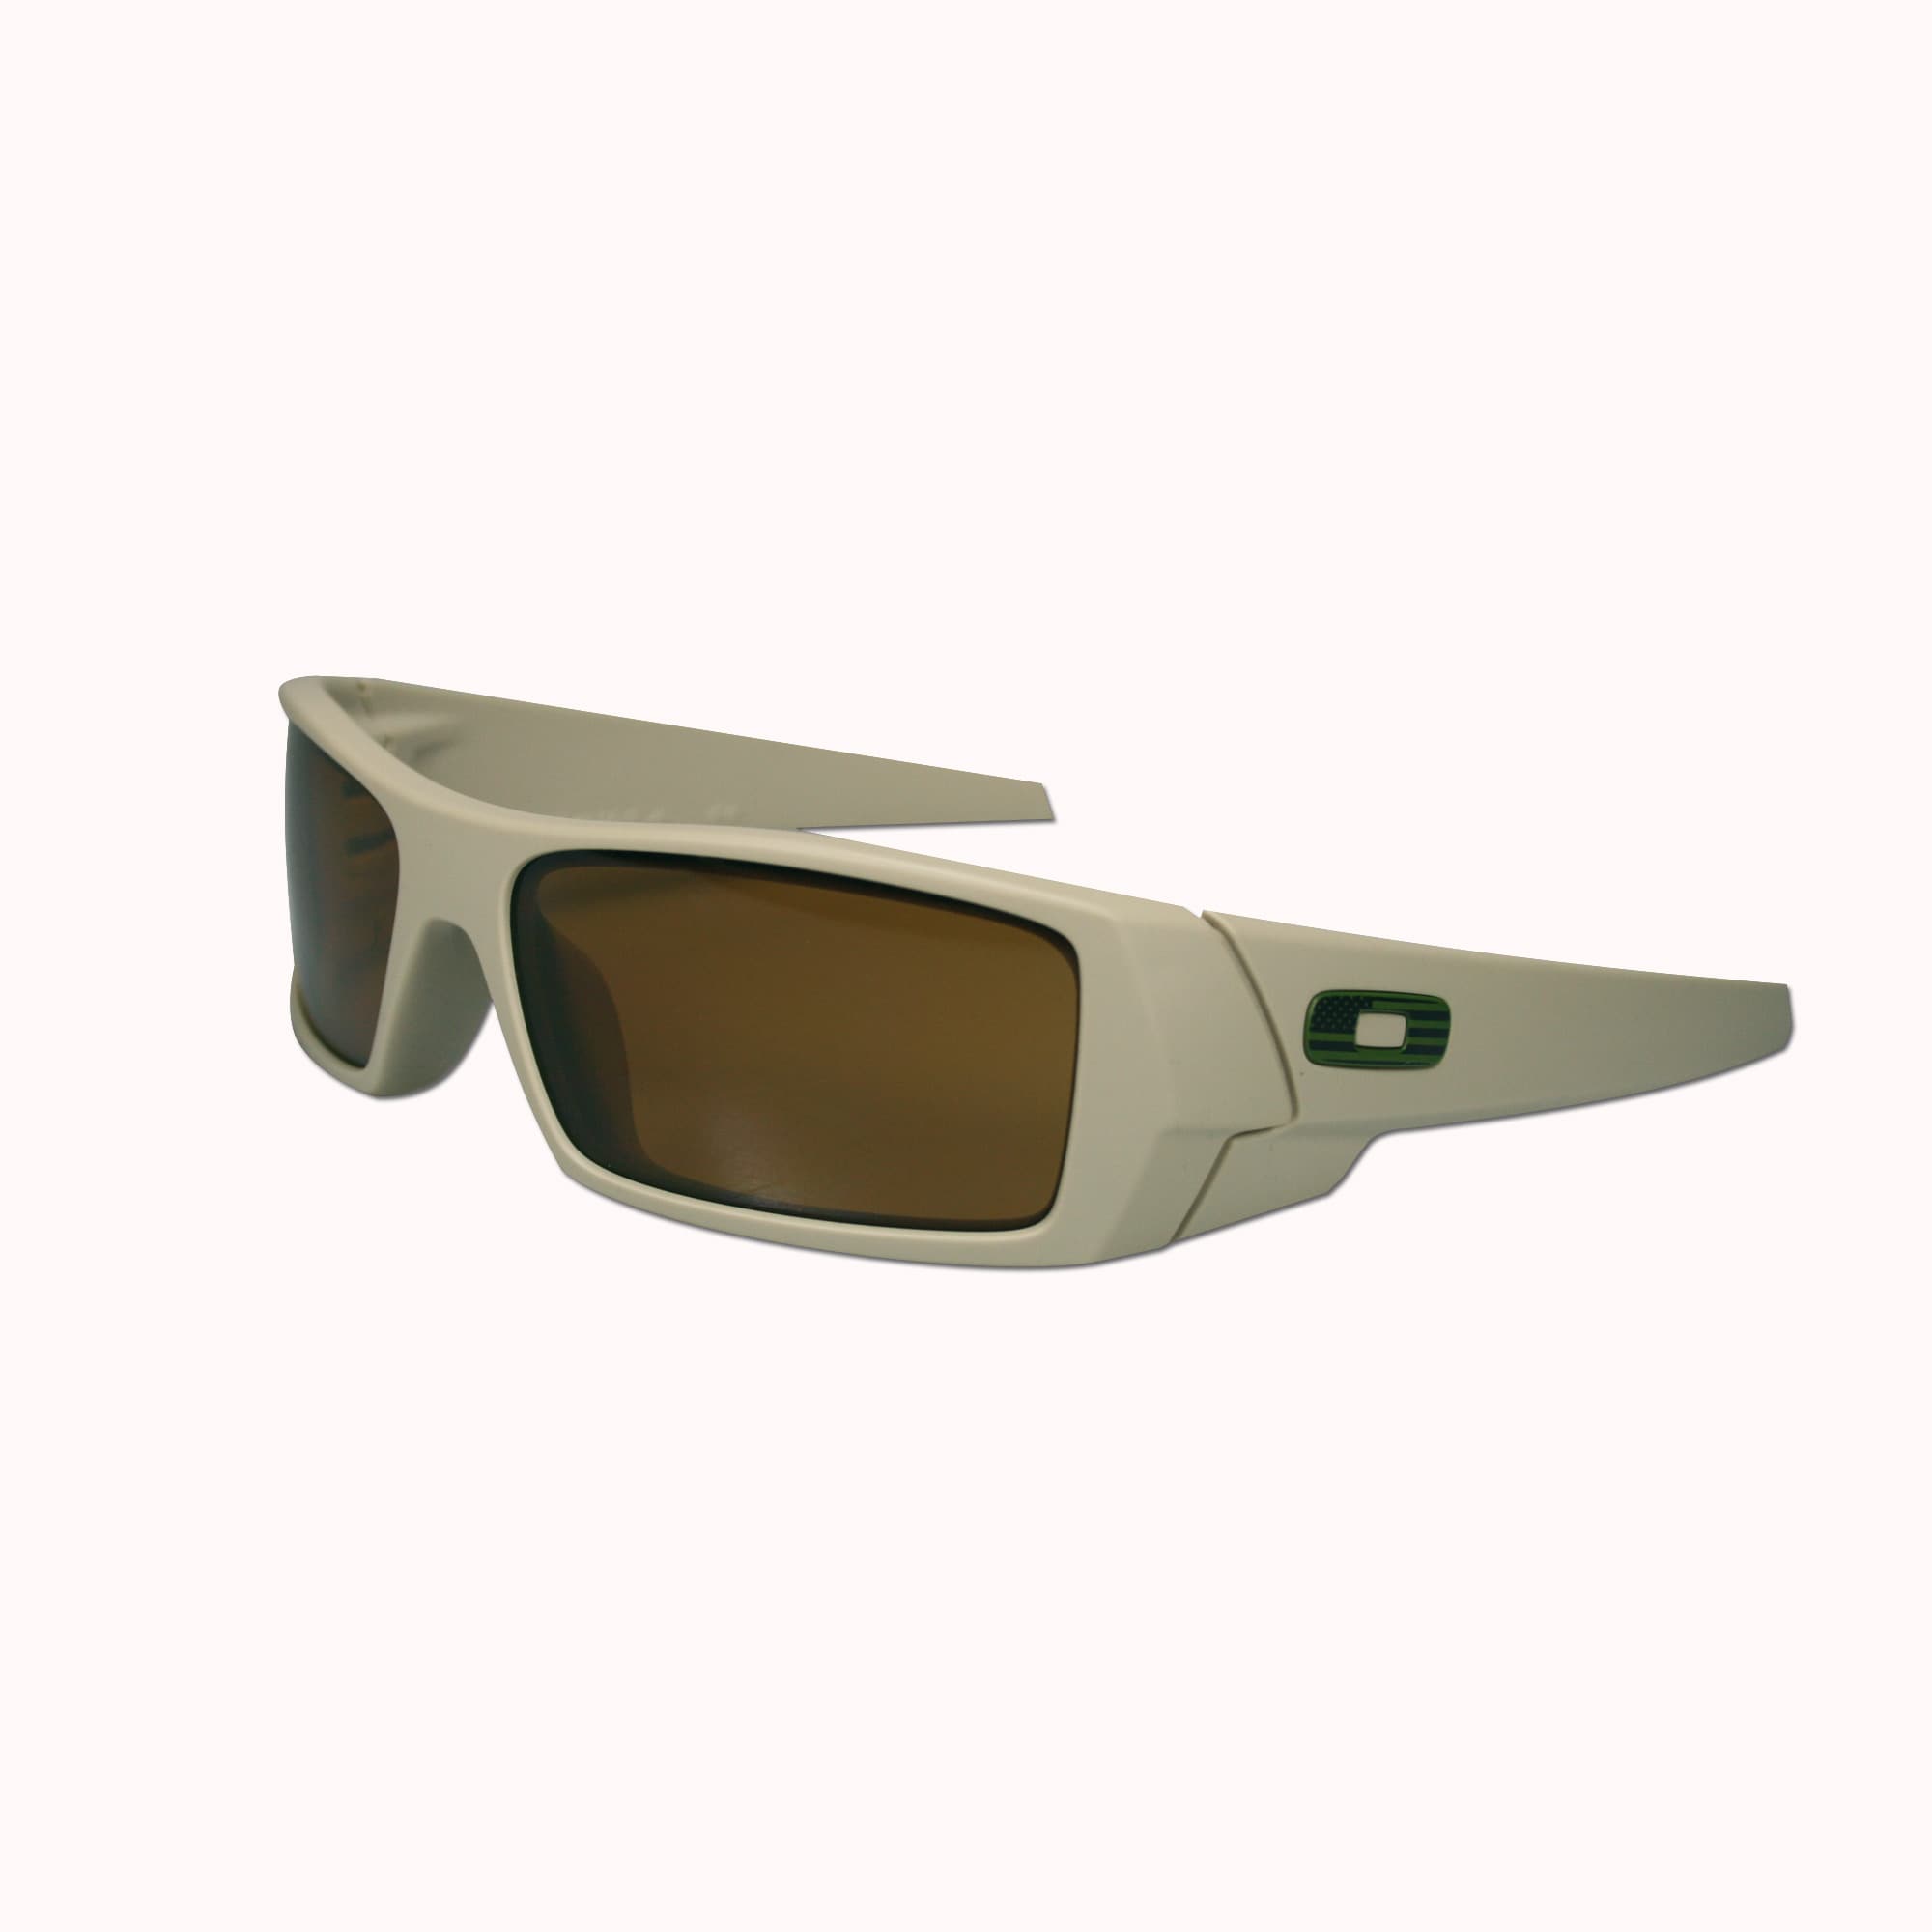 Purchase the Oakley Sunglasses Gascan desert by ASMC